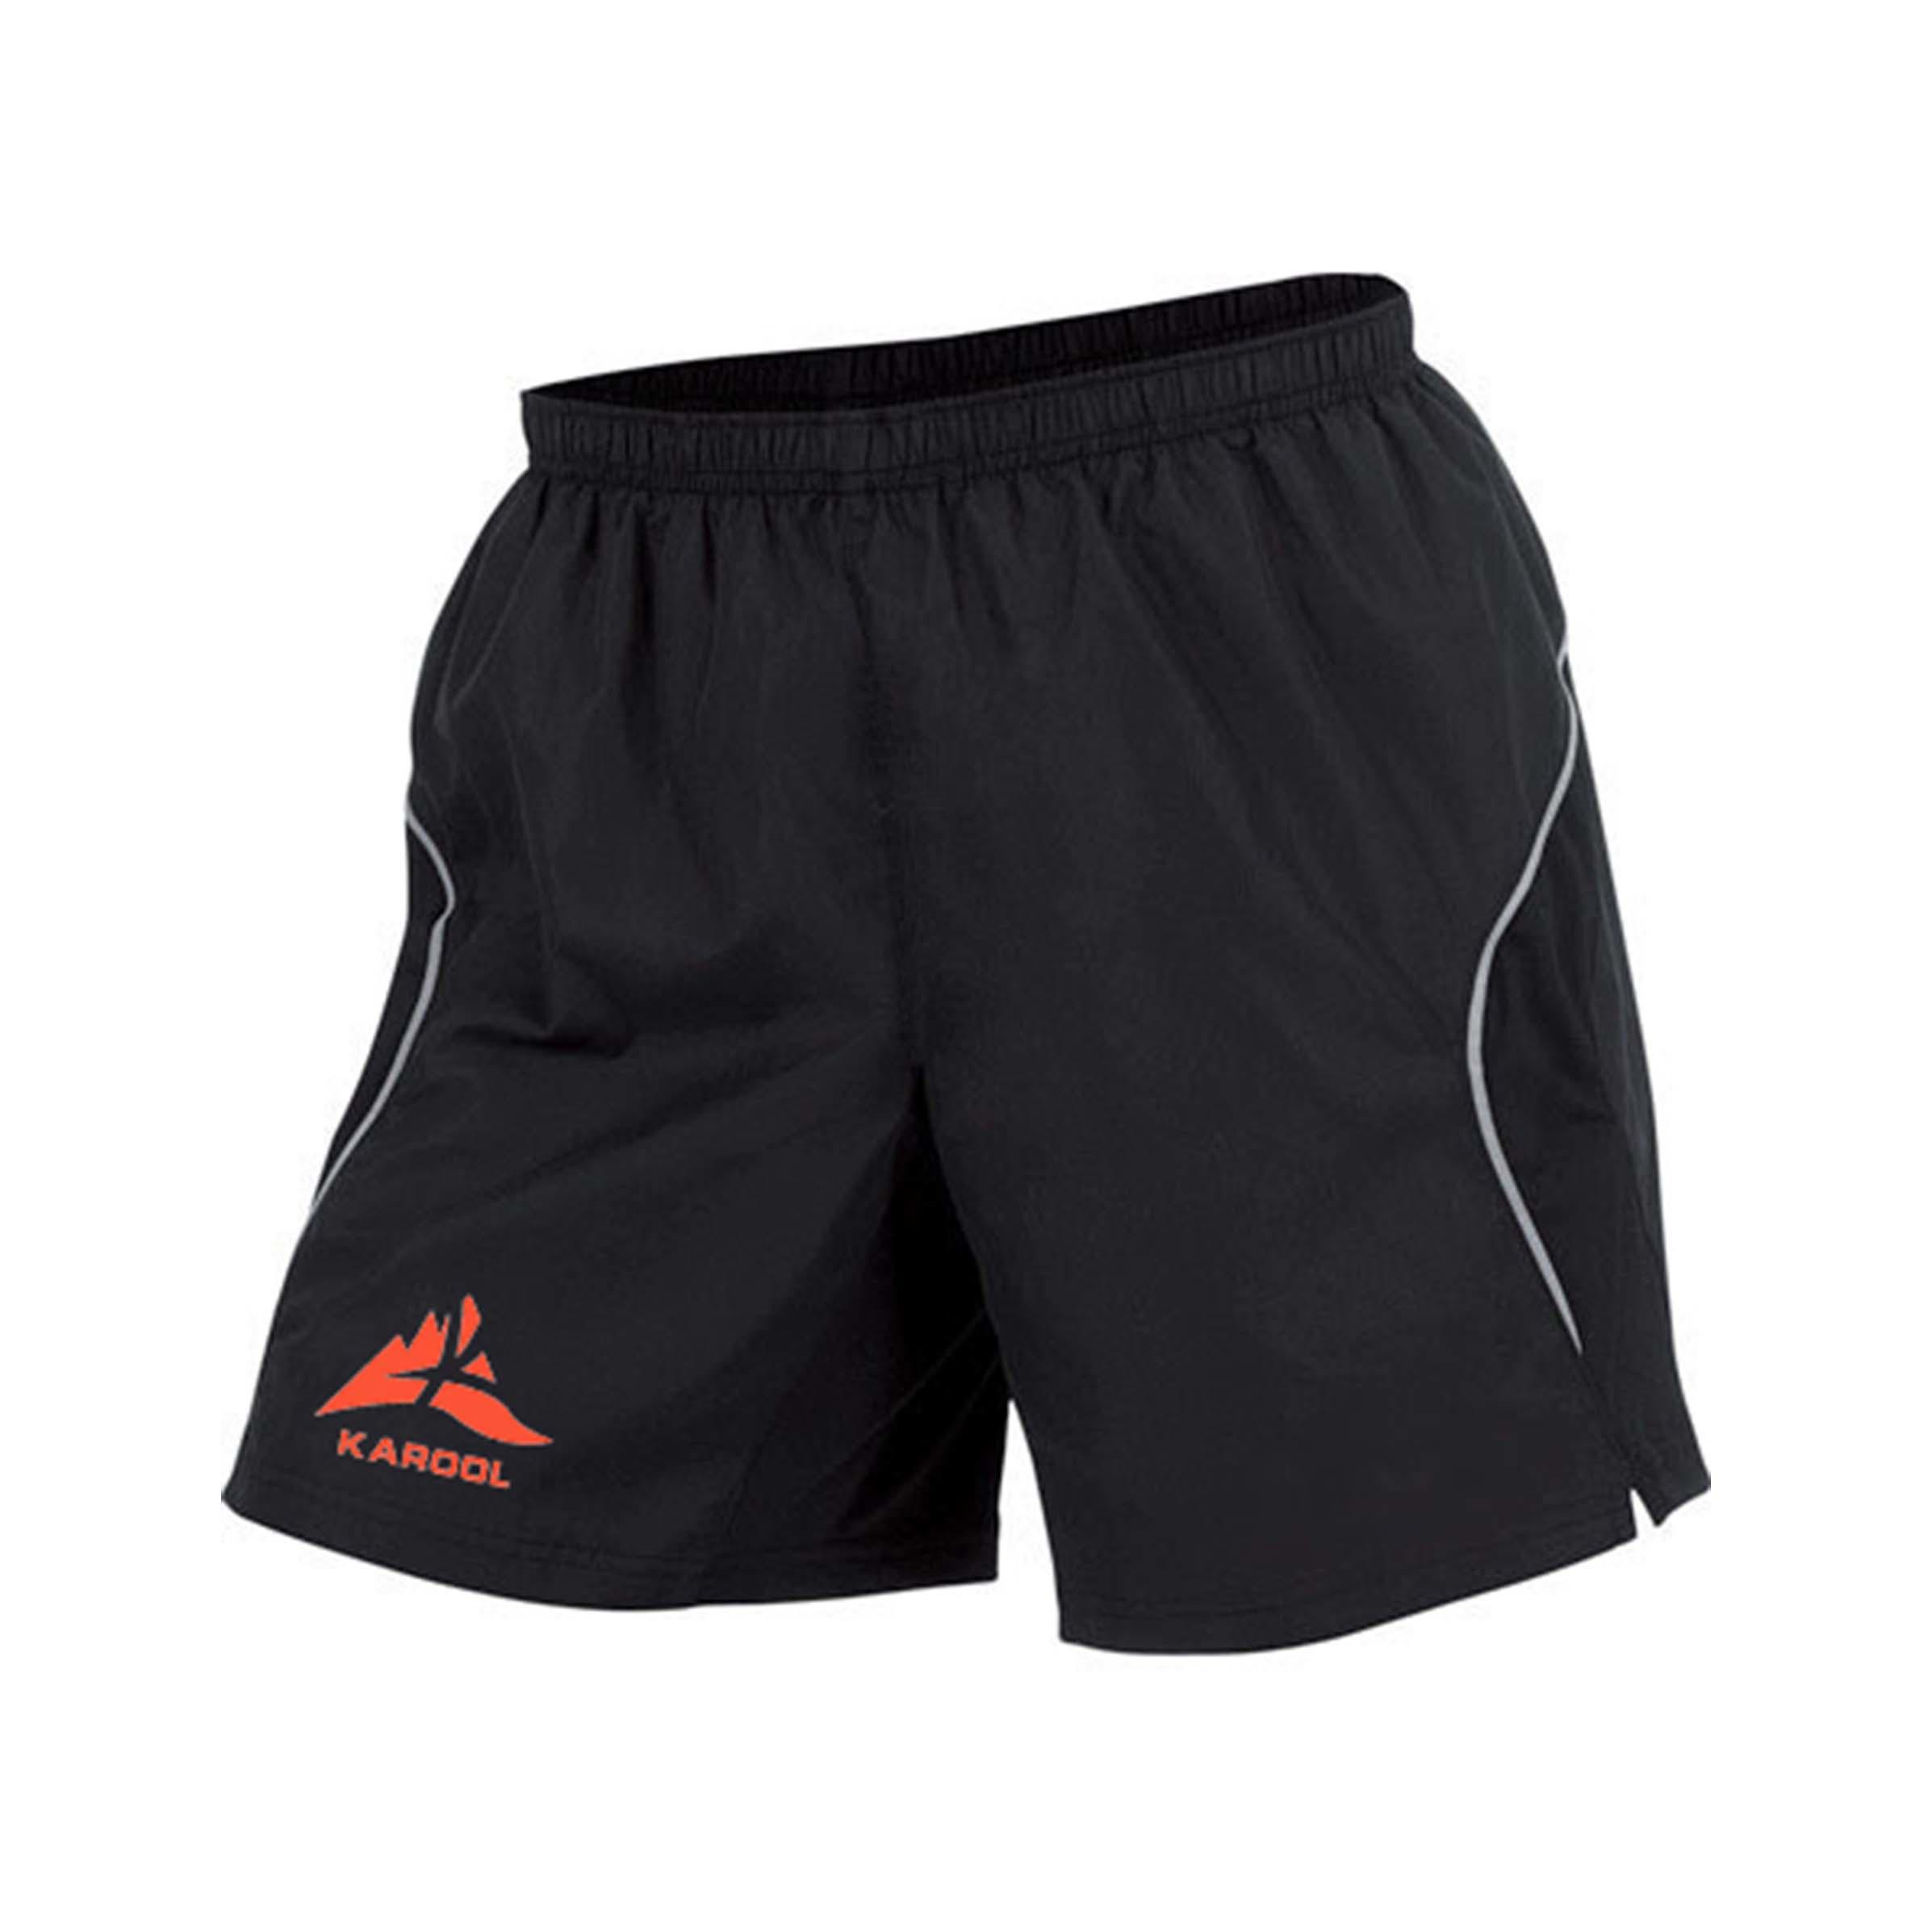 Karool casual black running shorts wholesale for men-1